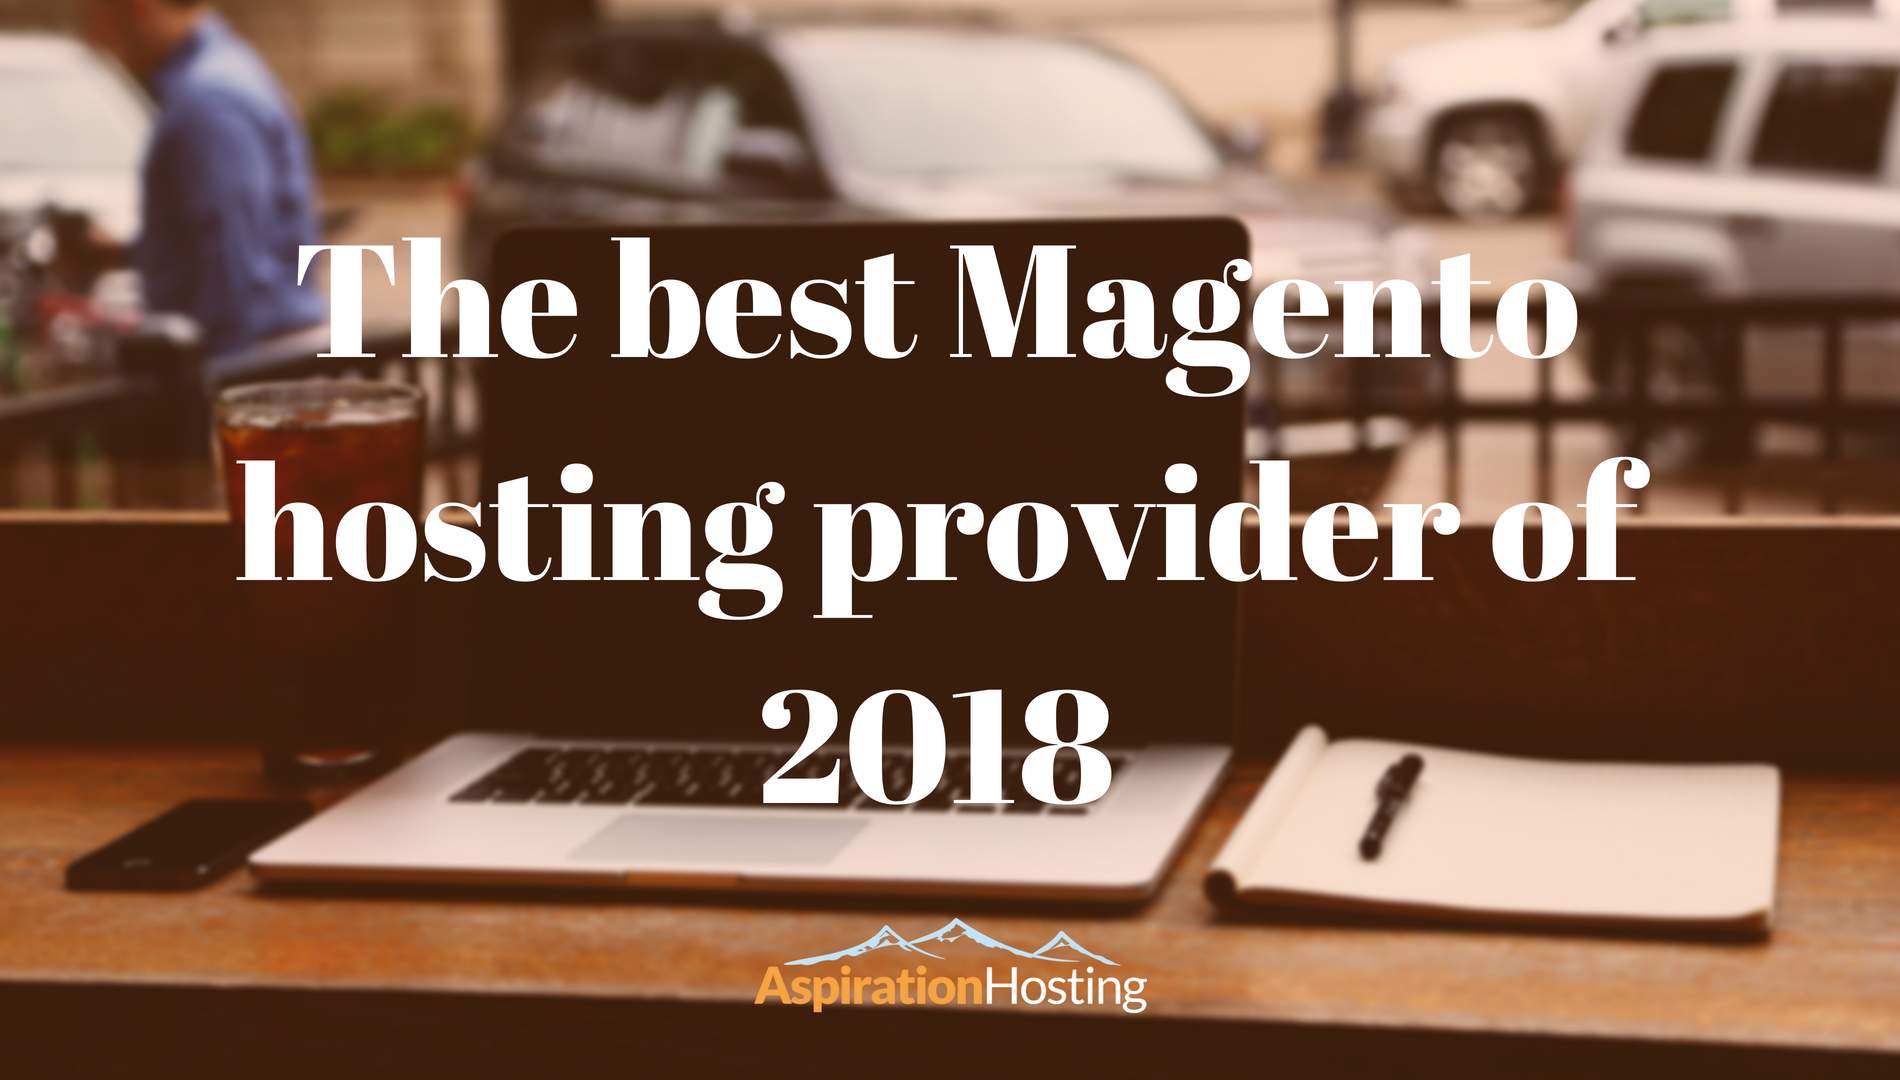 The best Magento hosting provider of 2018 - Aspiration Hosting